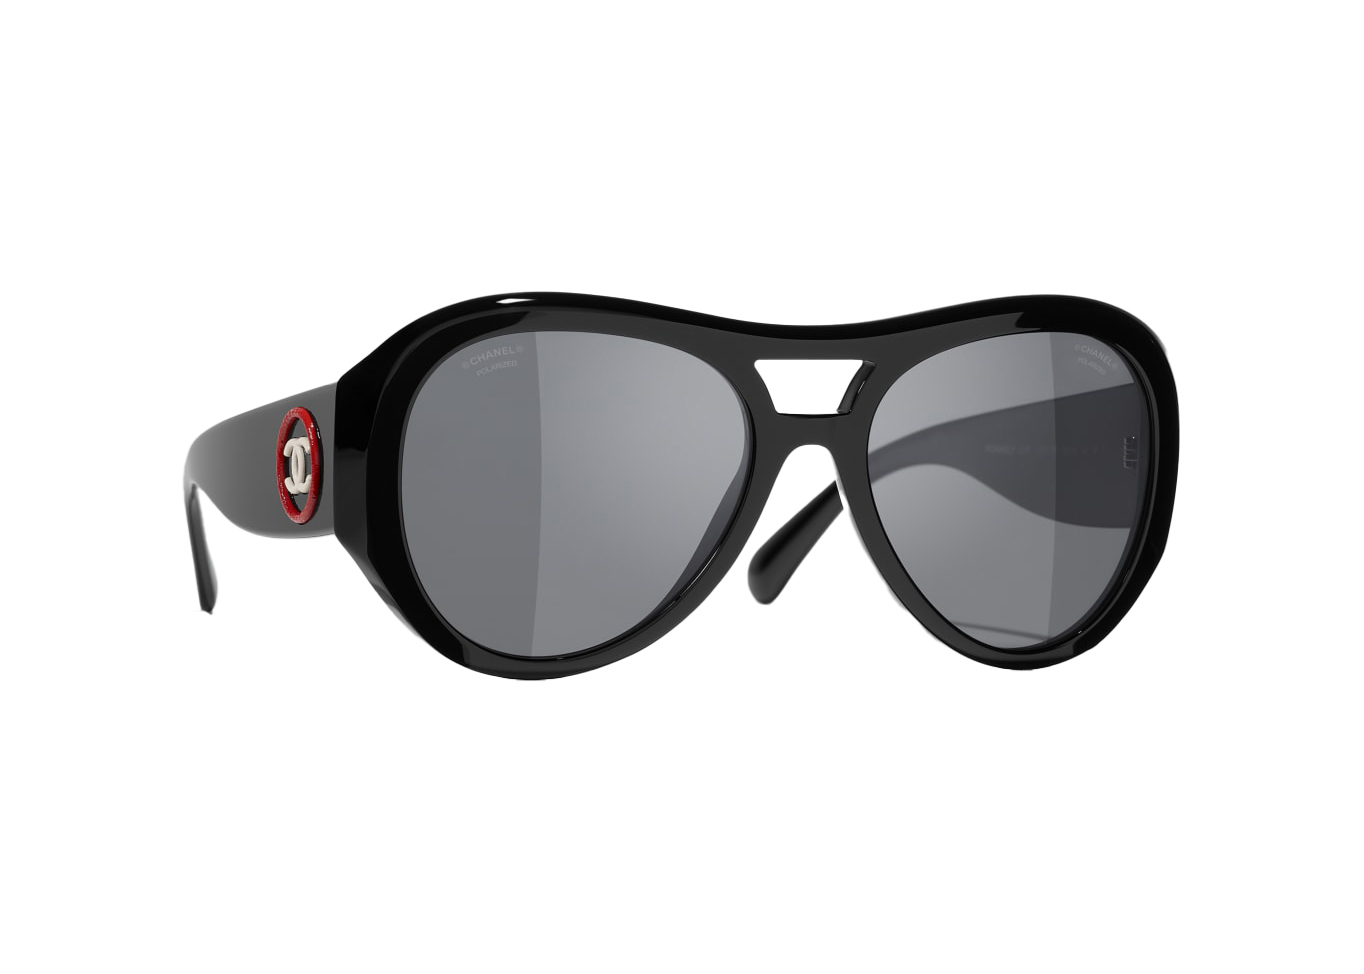 Authentic Chanel Sunglasses 4244 395/S6 57 18 Large Square Glasses w/ Case  | eBay